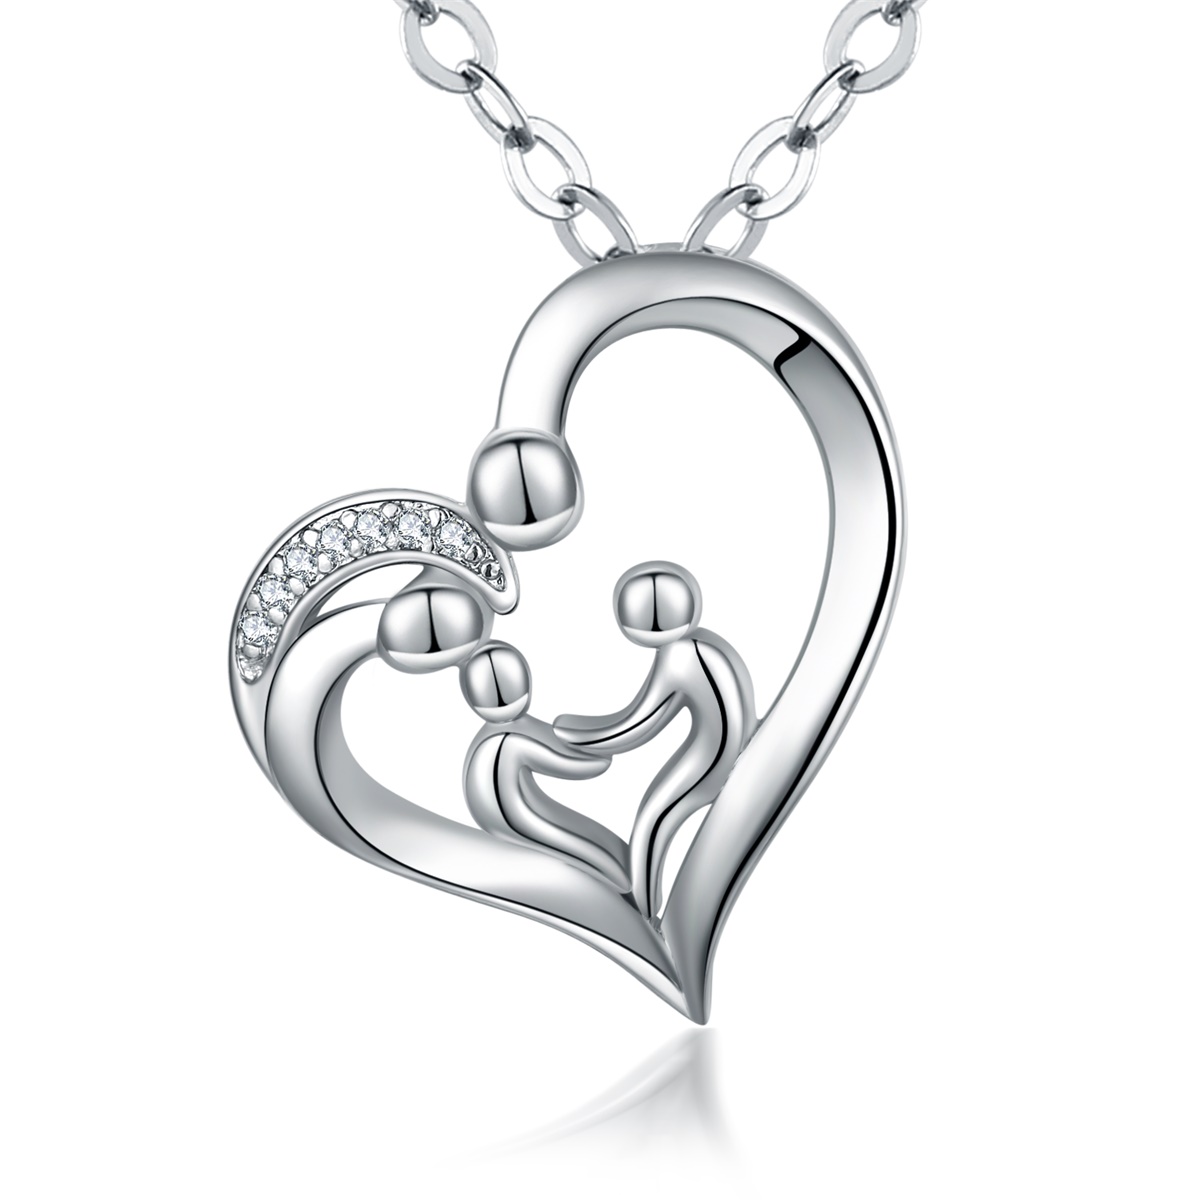 Merryshine Jewelry Low Price Fastness Family Heart Pendant Necklace with Cubic Zirconia White Diamond